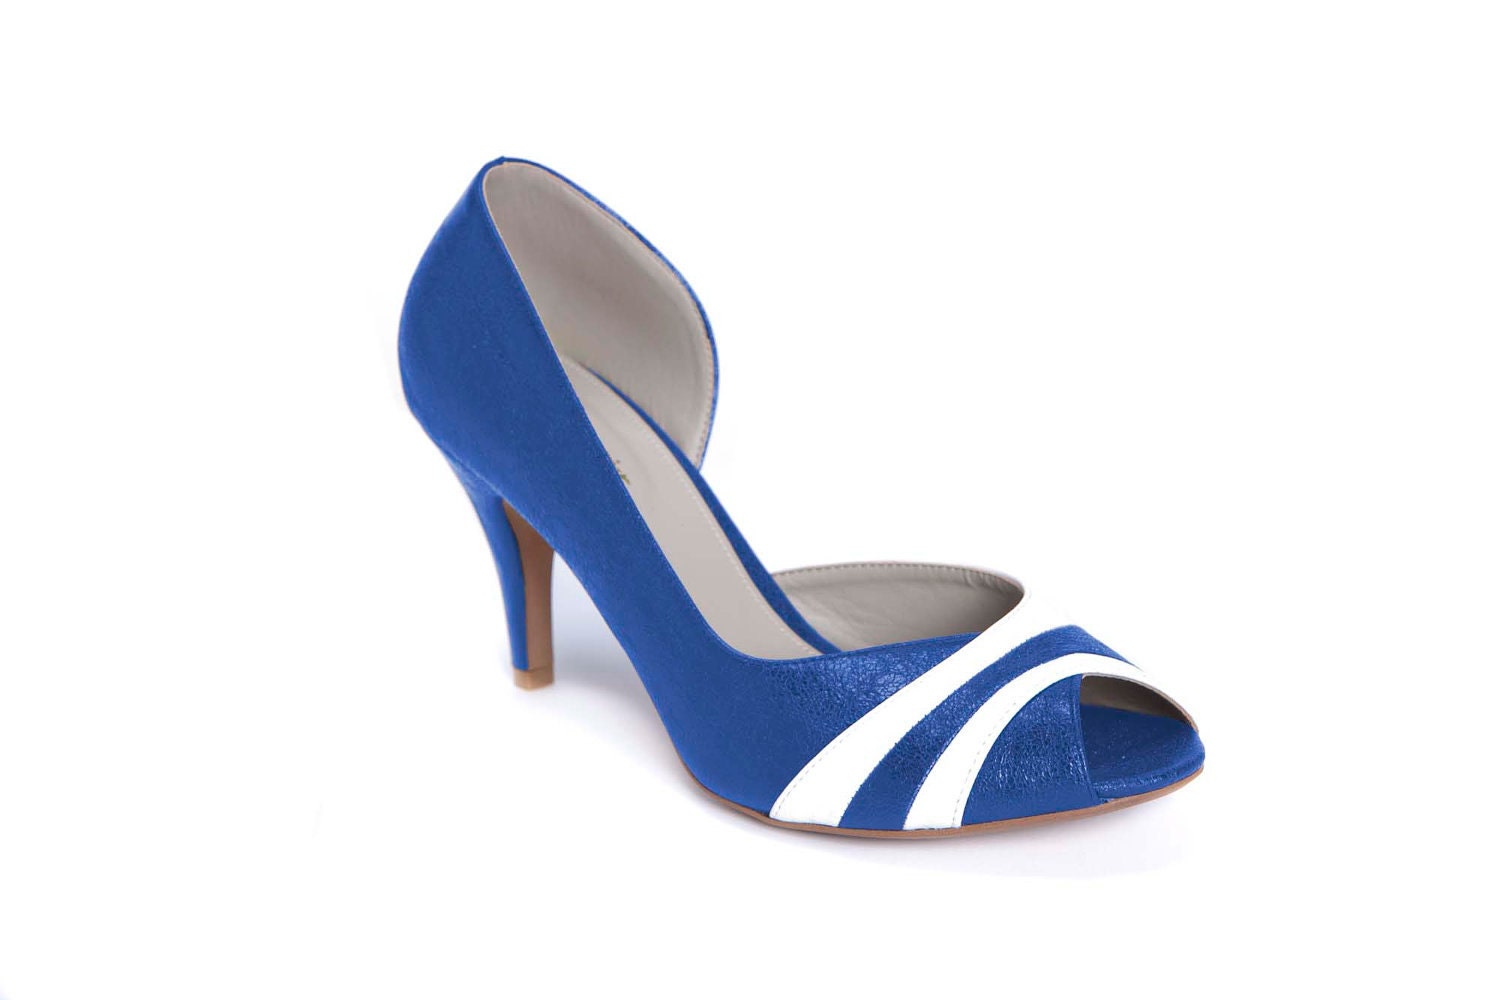 Roni Kantor Vintage inspired - ODELYA heels - sailor white and blue - FREE SHIPPING